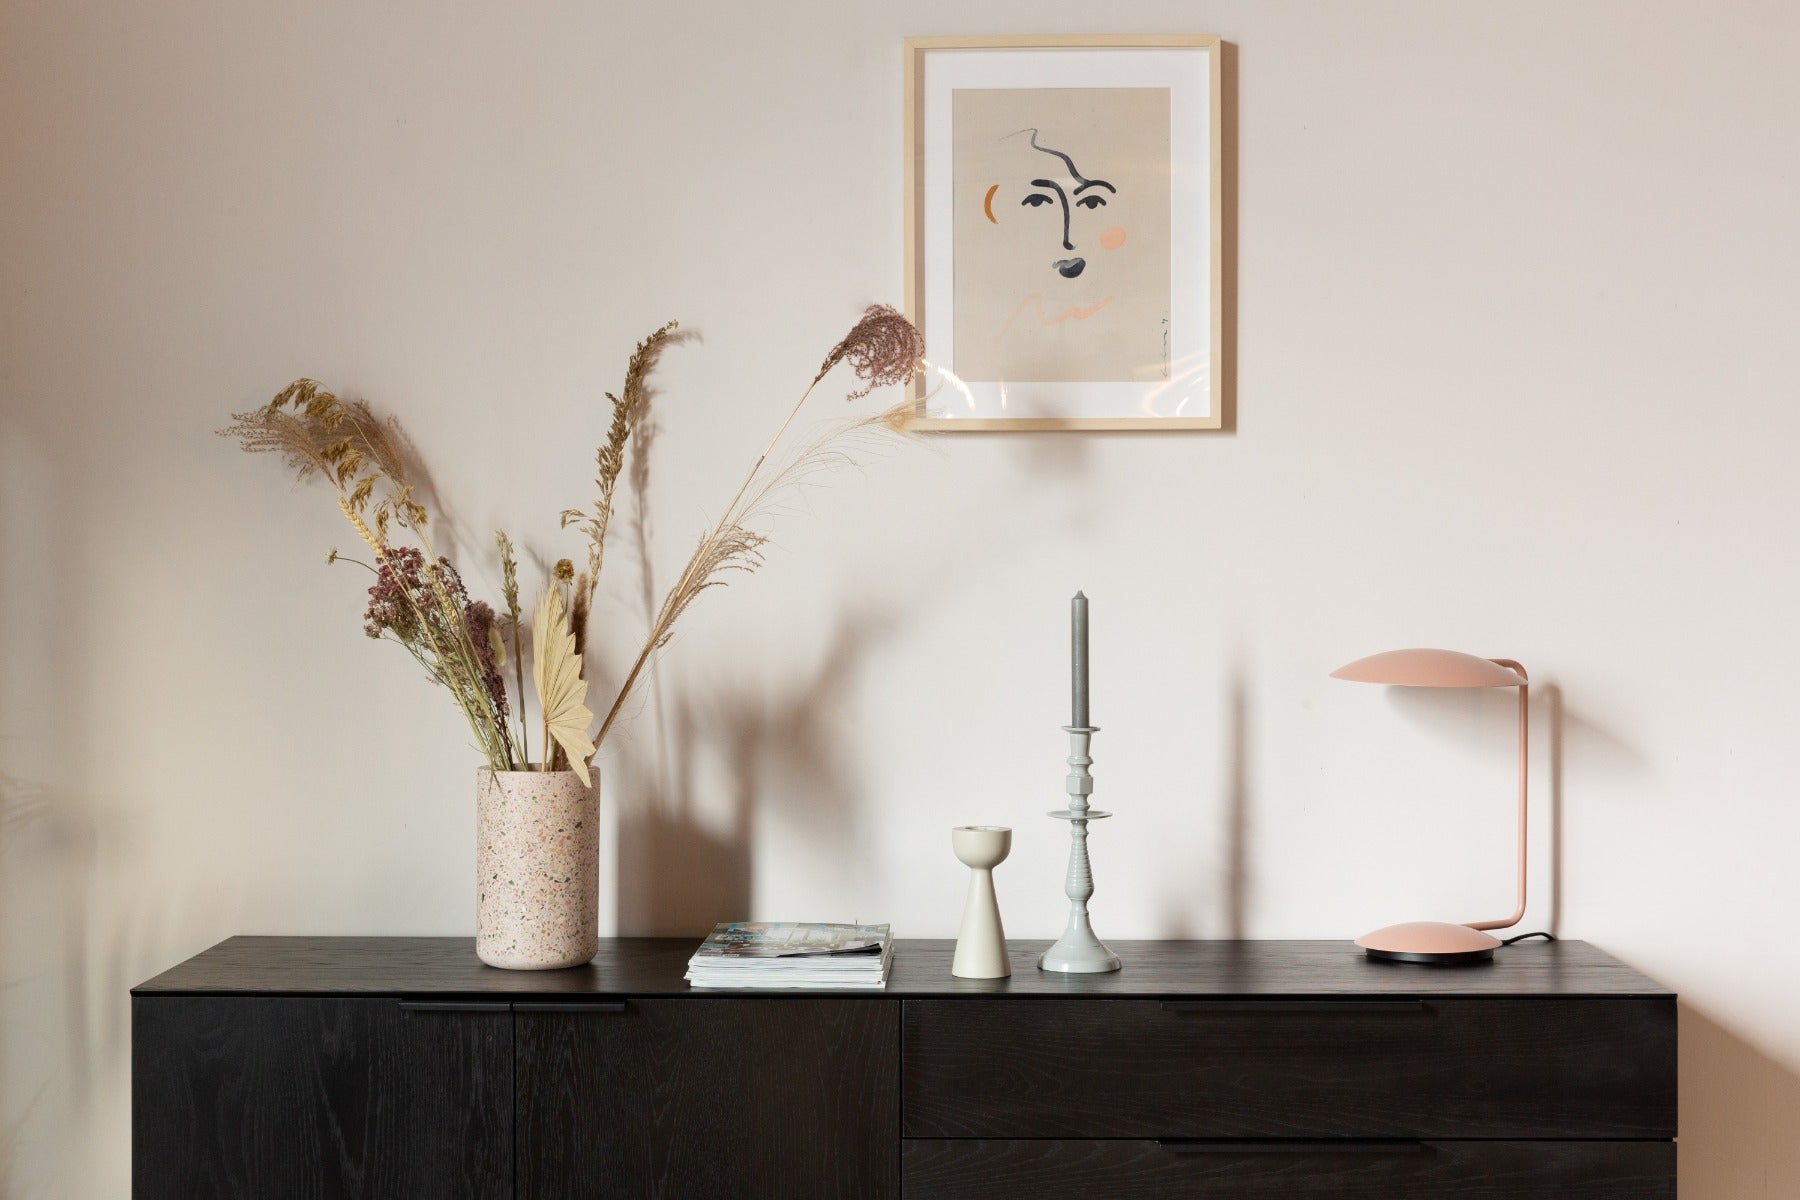 PIXIE desk lamp pink, Zuiver, Eye on Design